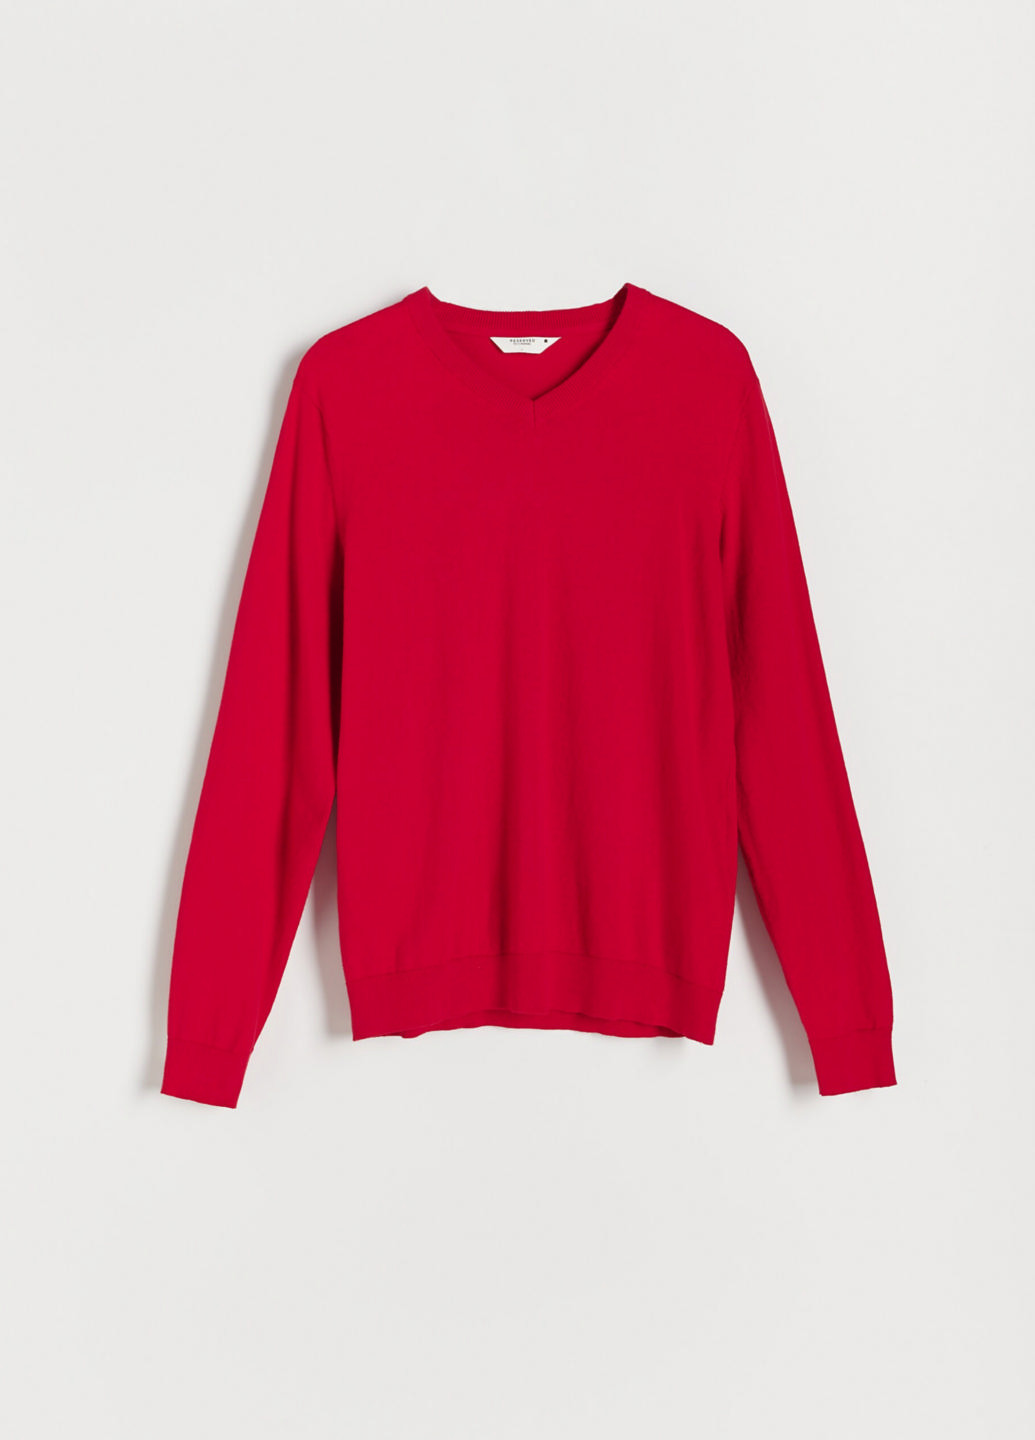 Терракотовый демисезонный пуловер пуловер Reserved